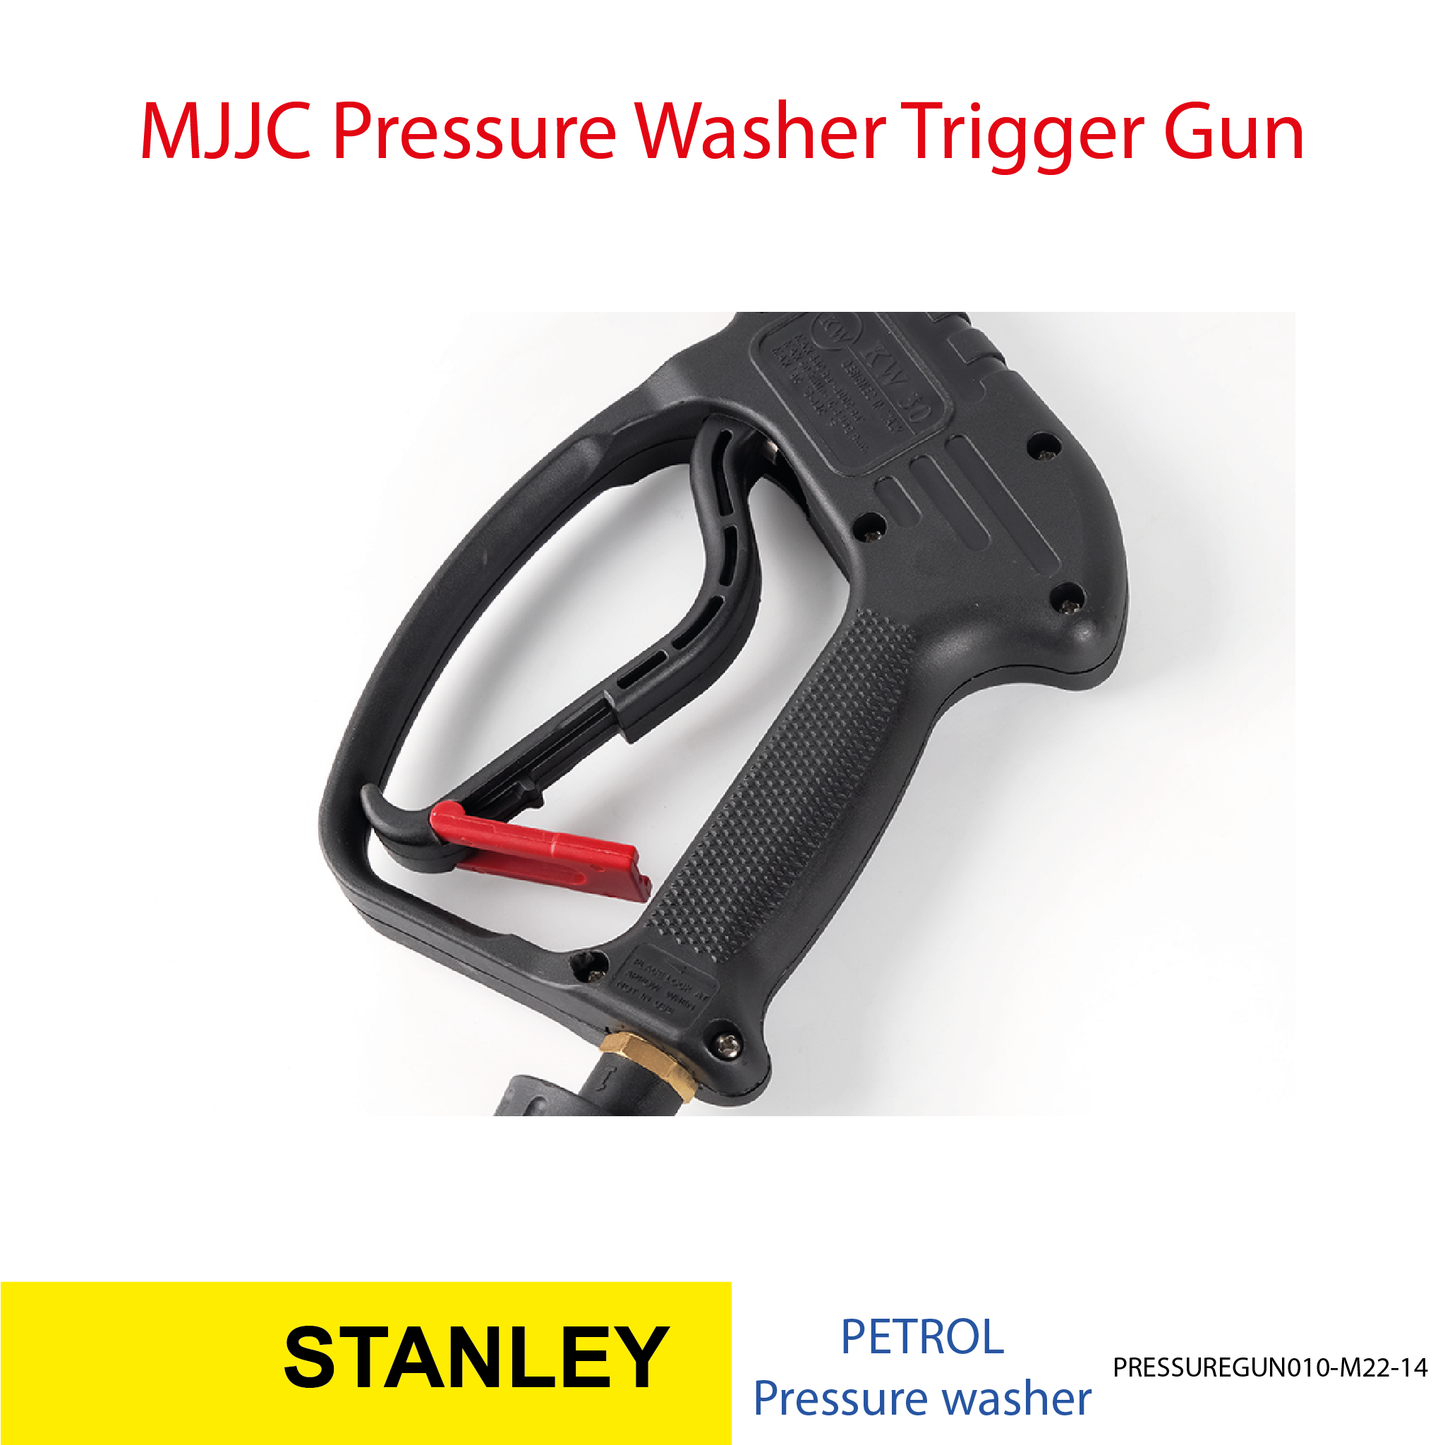 Stanley Petrol Pressure Washer - MJJC Light Weight Trigger Spray Gun with Live Swivel